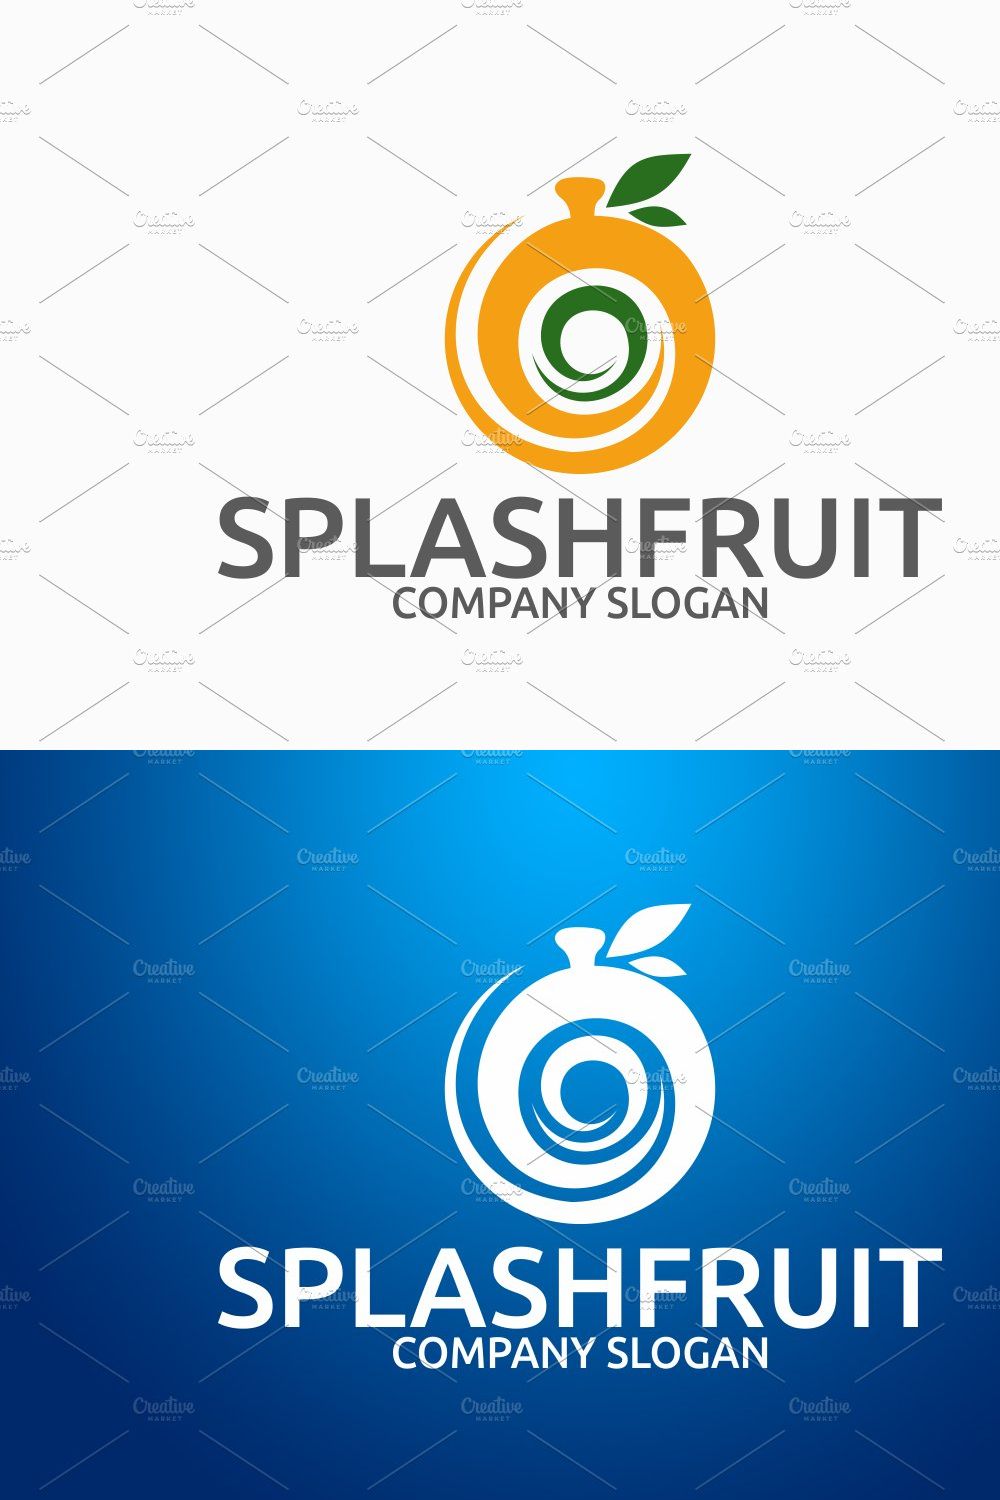 Splash Fruit Logo pinterest preview image.